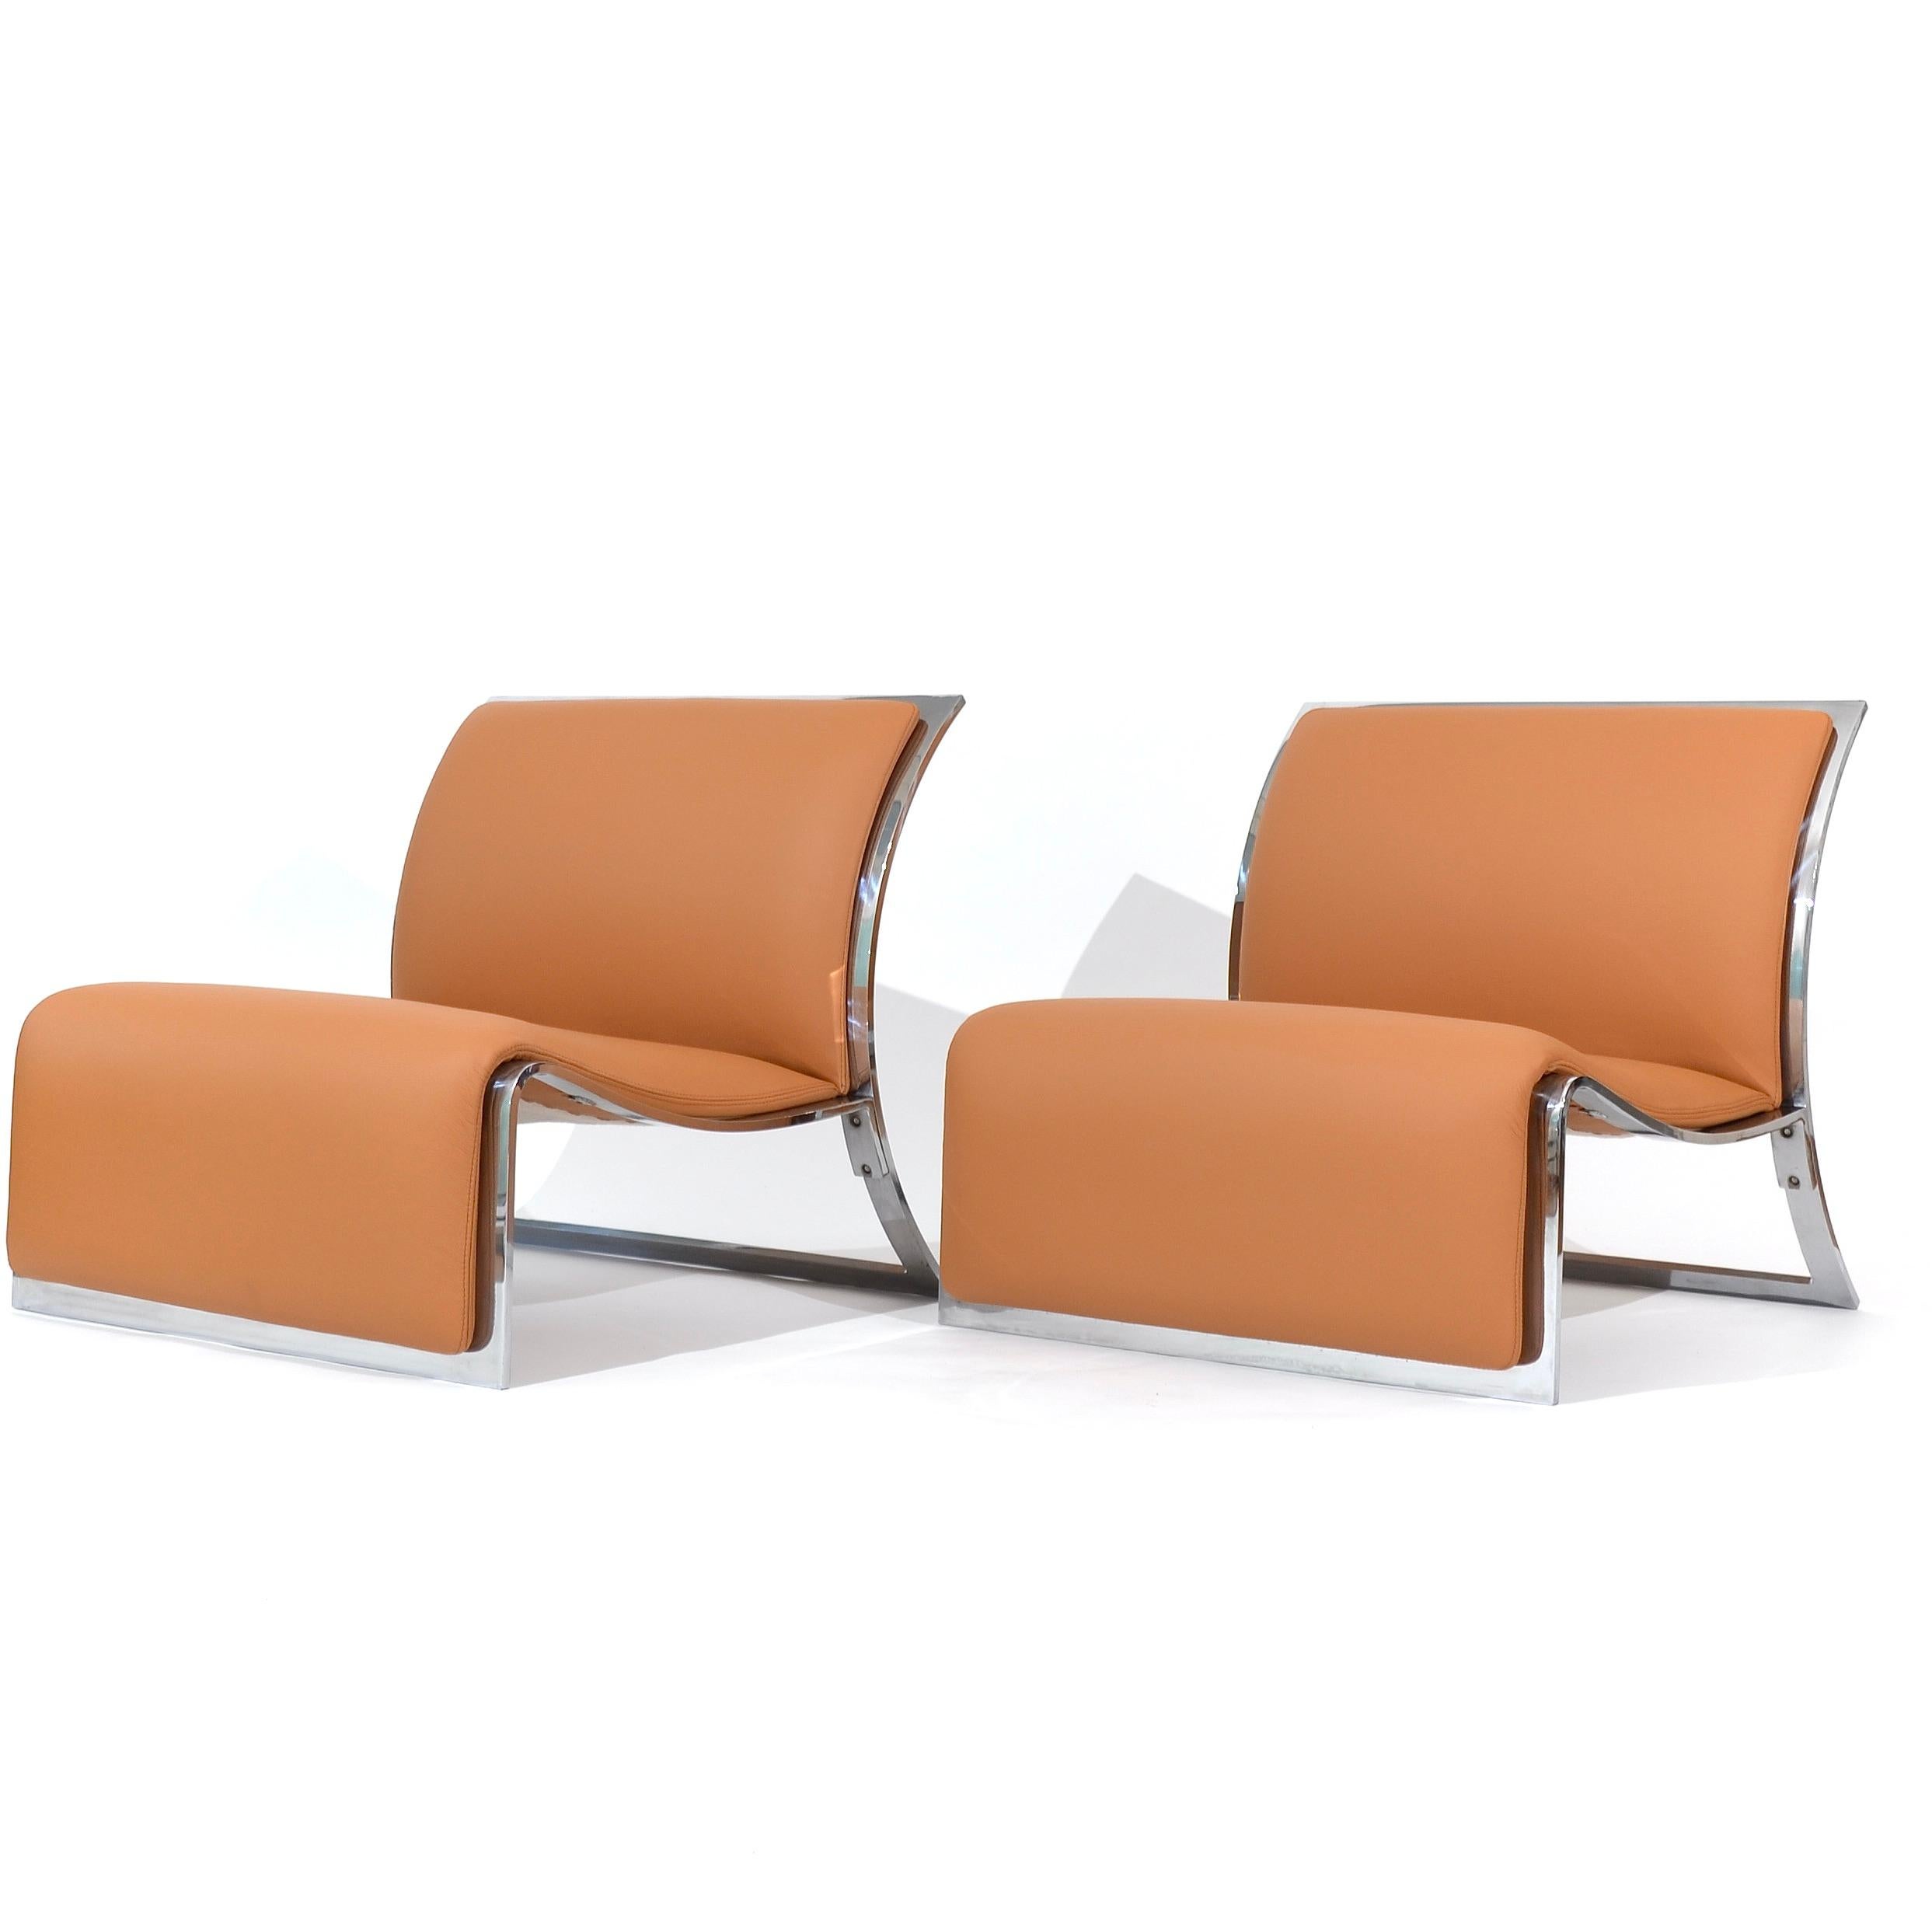 Saporiti leather lounge chairs, Vittorio Introini, Italy, 1965 For Sale 11